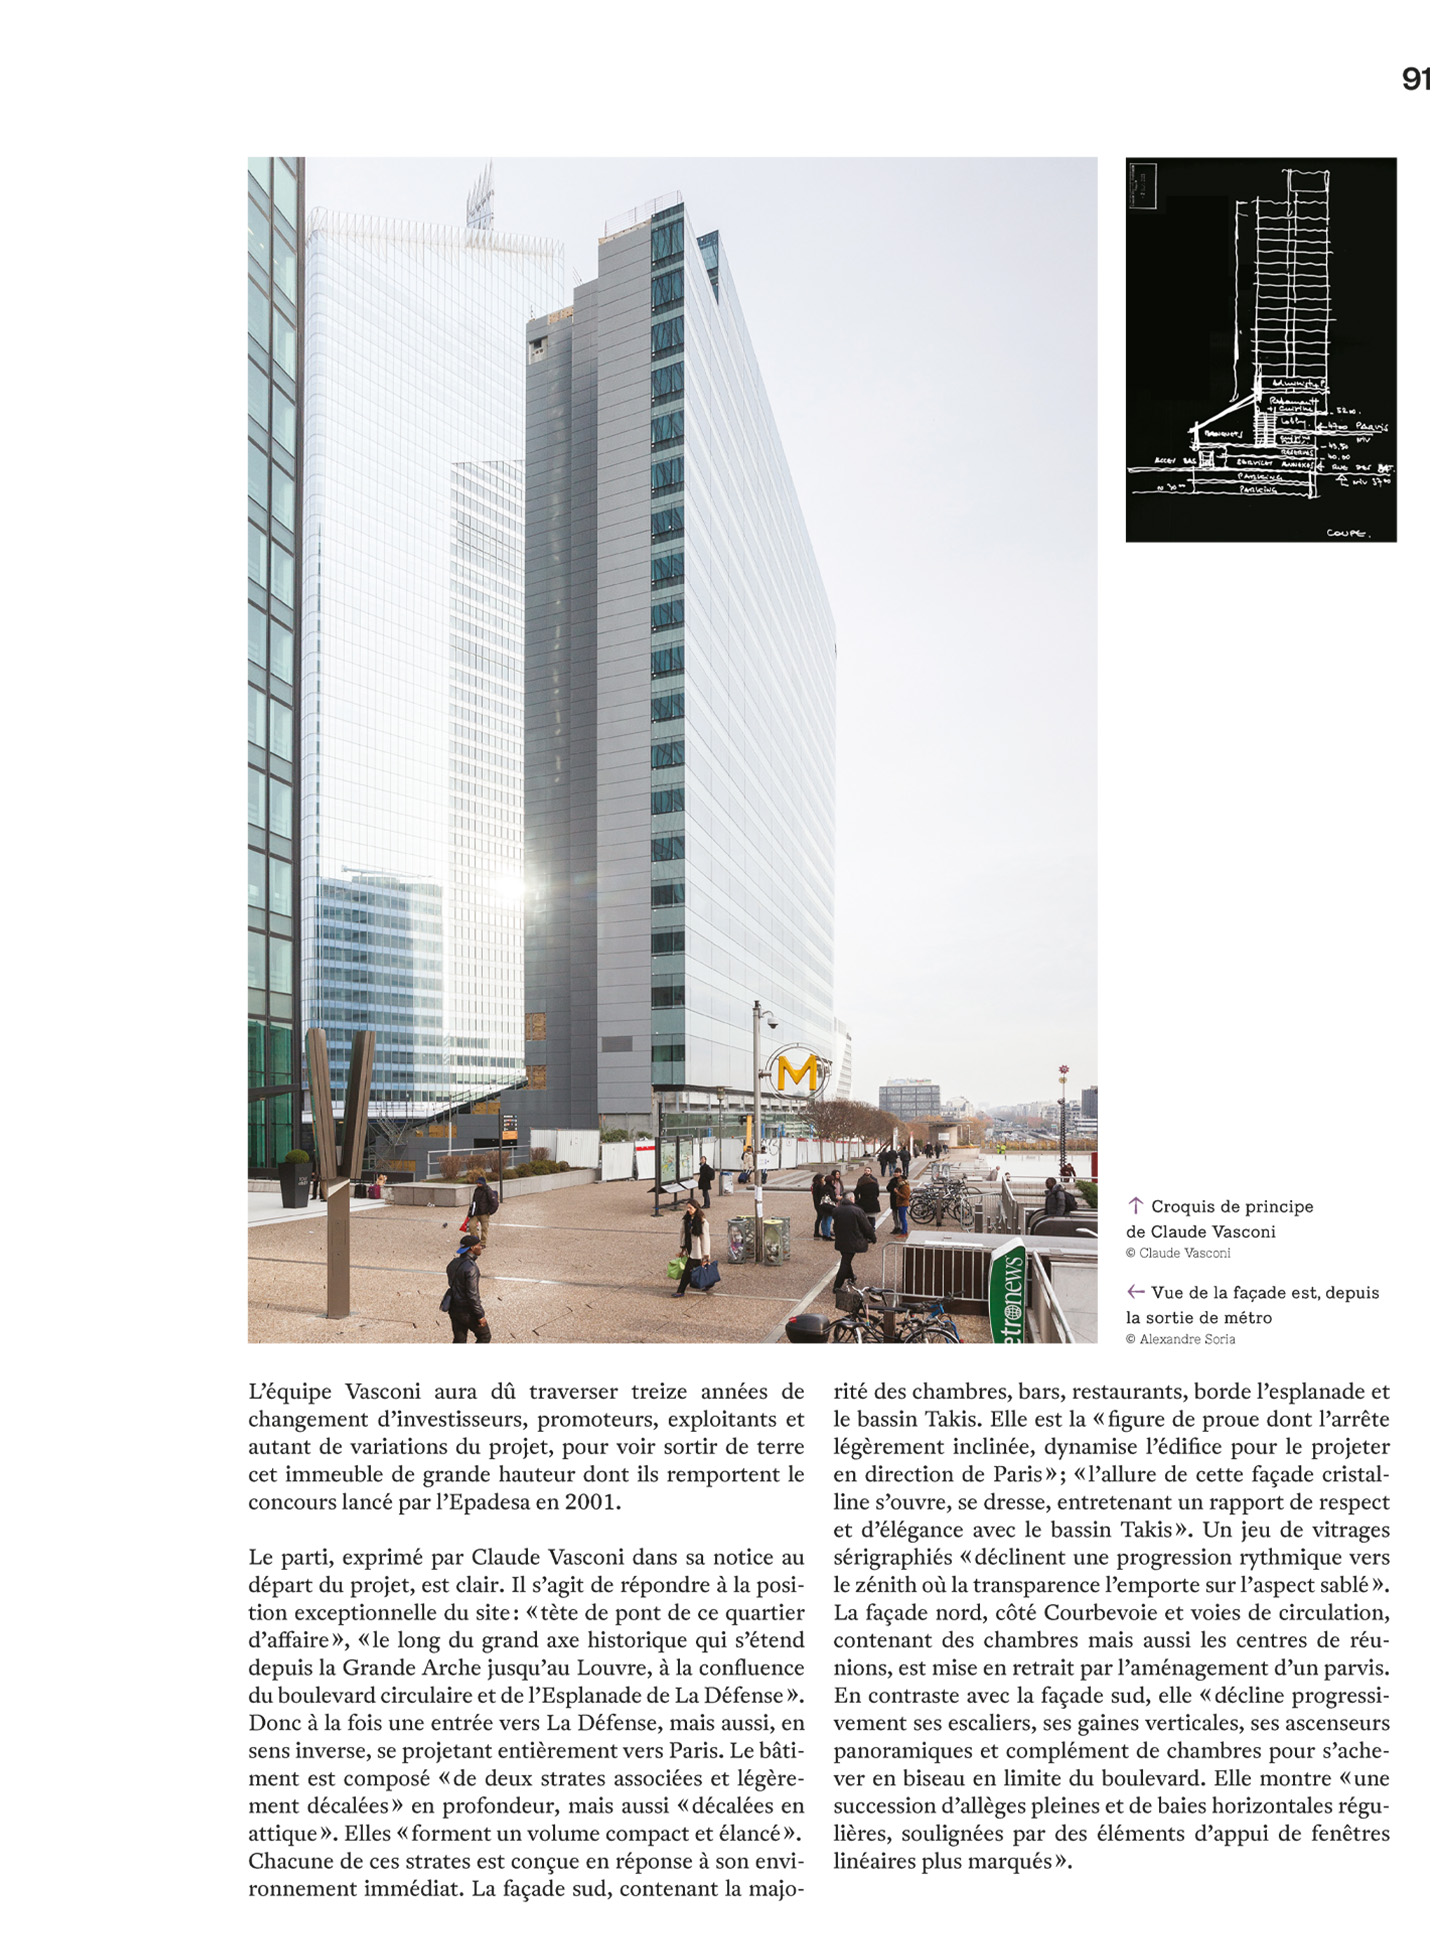 article on the Melia Paris La Défense, luxury hotel in Paris designed by the interior design studio jean-philippe nuel, in the magazine archistorm